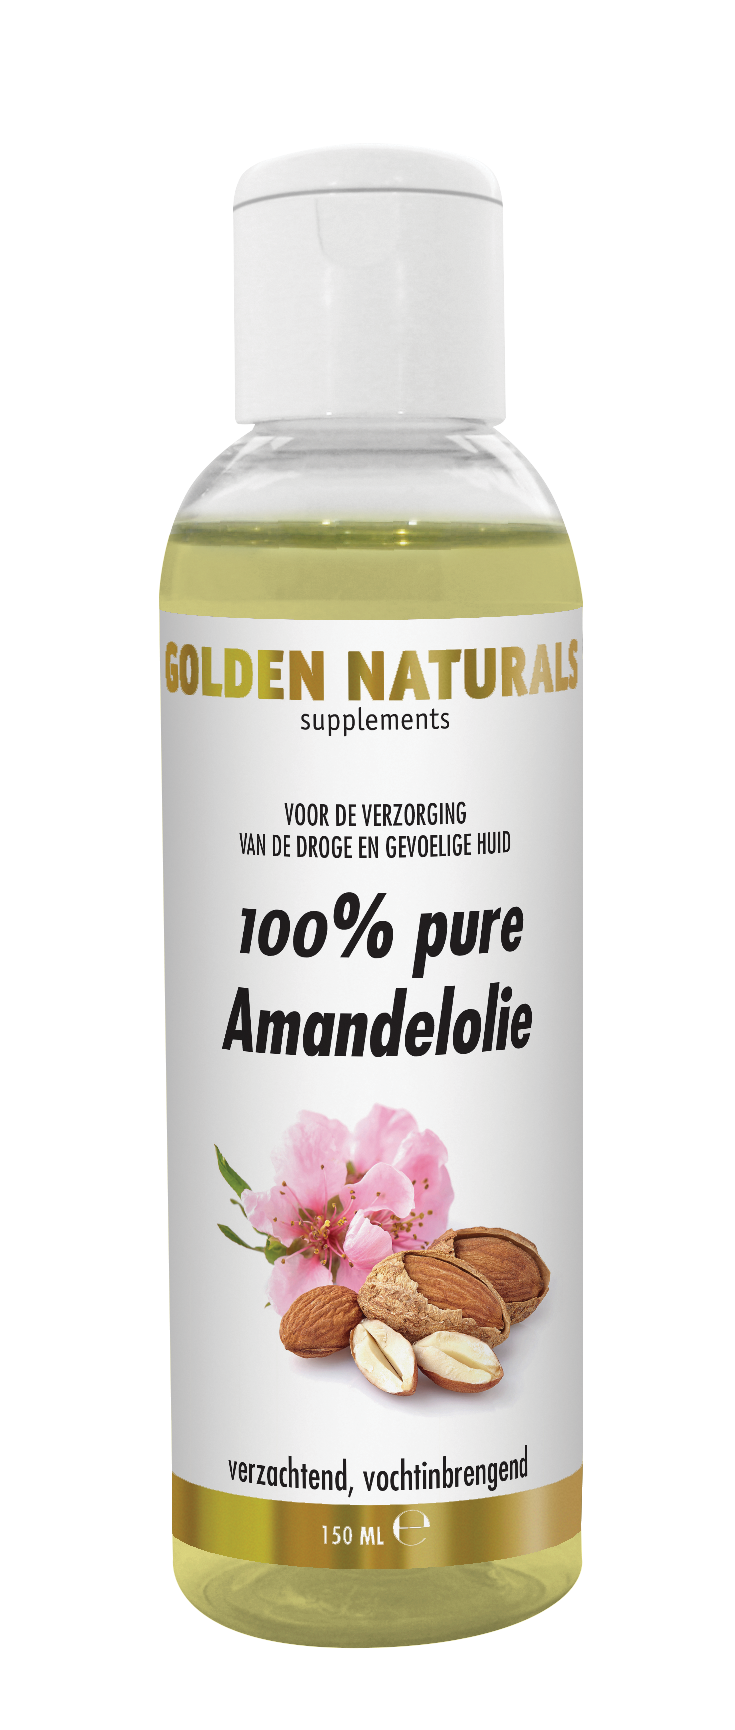 De schuld geven Dagelijks Hol Golden Naturals 100% pure Amandelolie kopen? - GoldenNaturals.nl